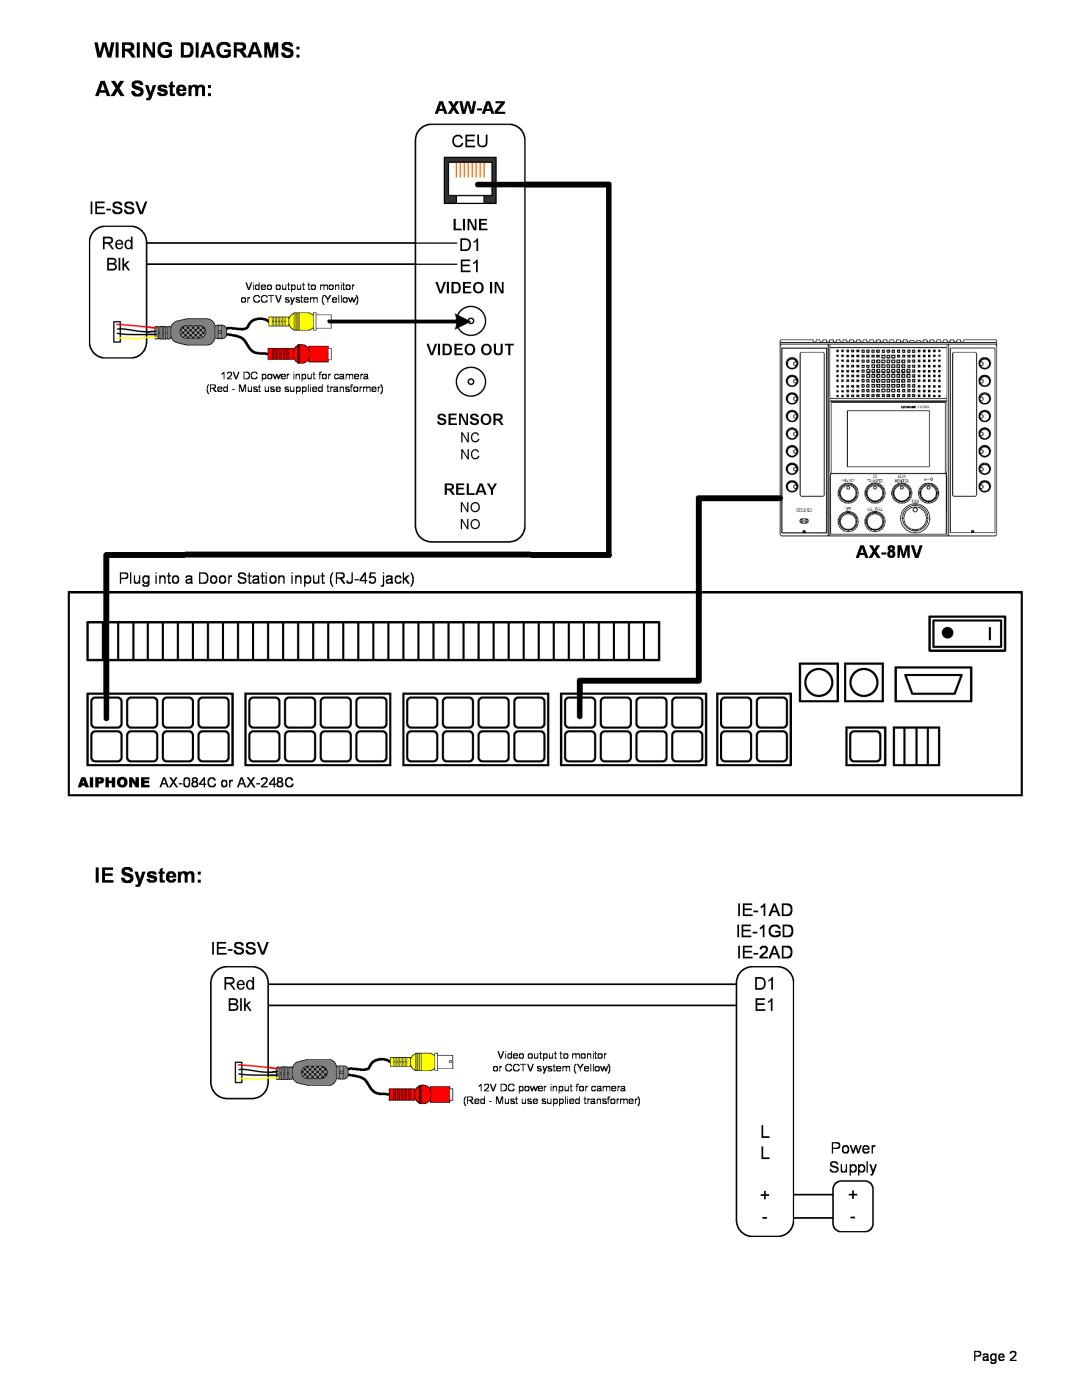 Aiphone ie-ssv manual WIRING DIAGRAMS AX System, IE System, Axw-Az, AX-8MV 